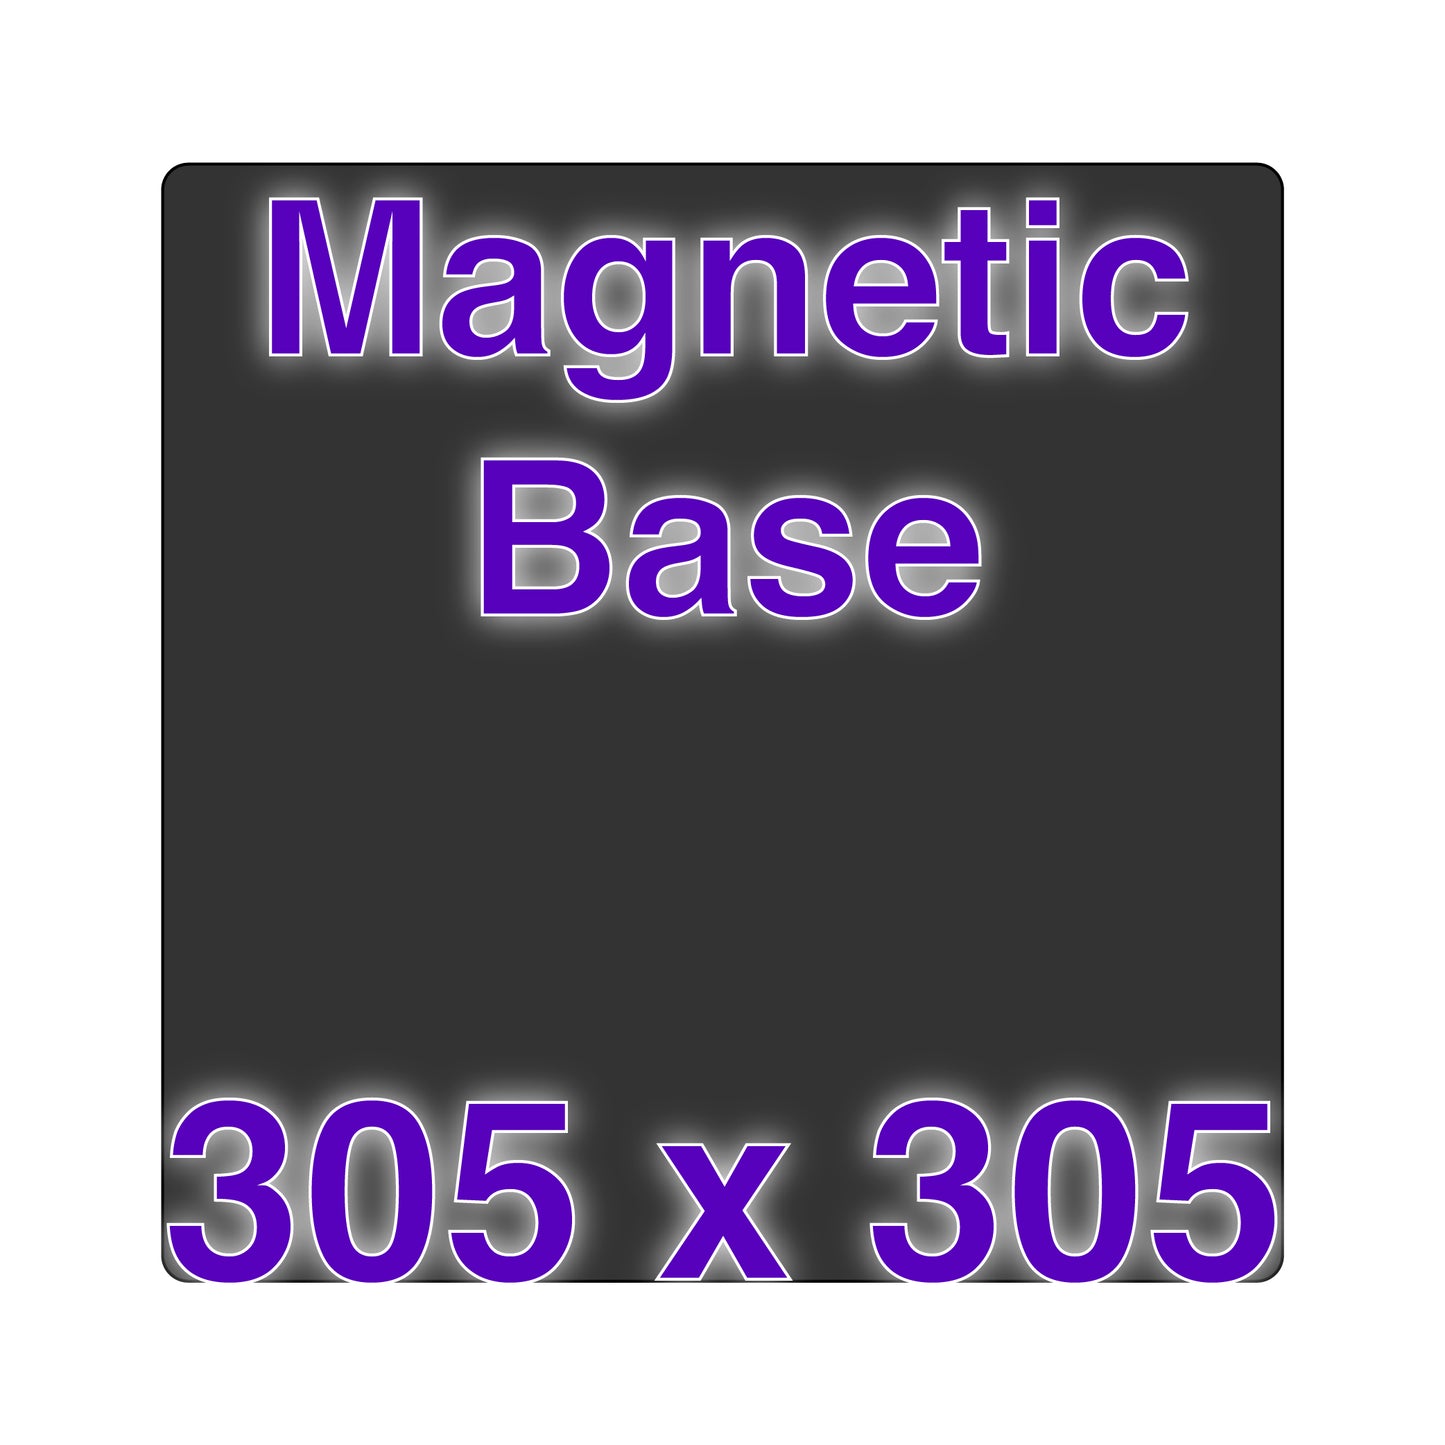 Magnetic Base - 305 x 305